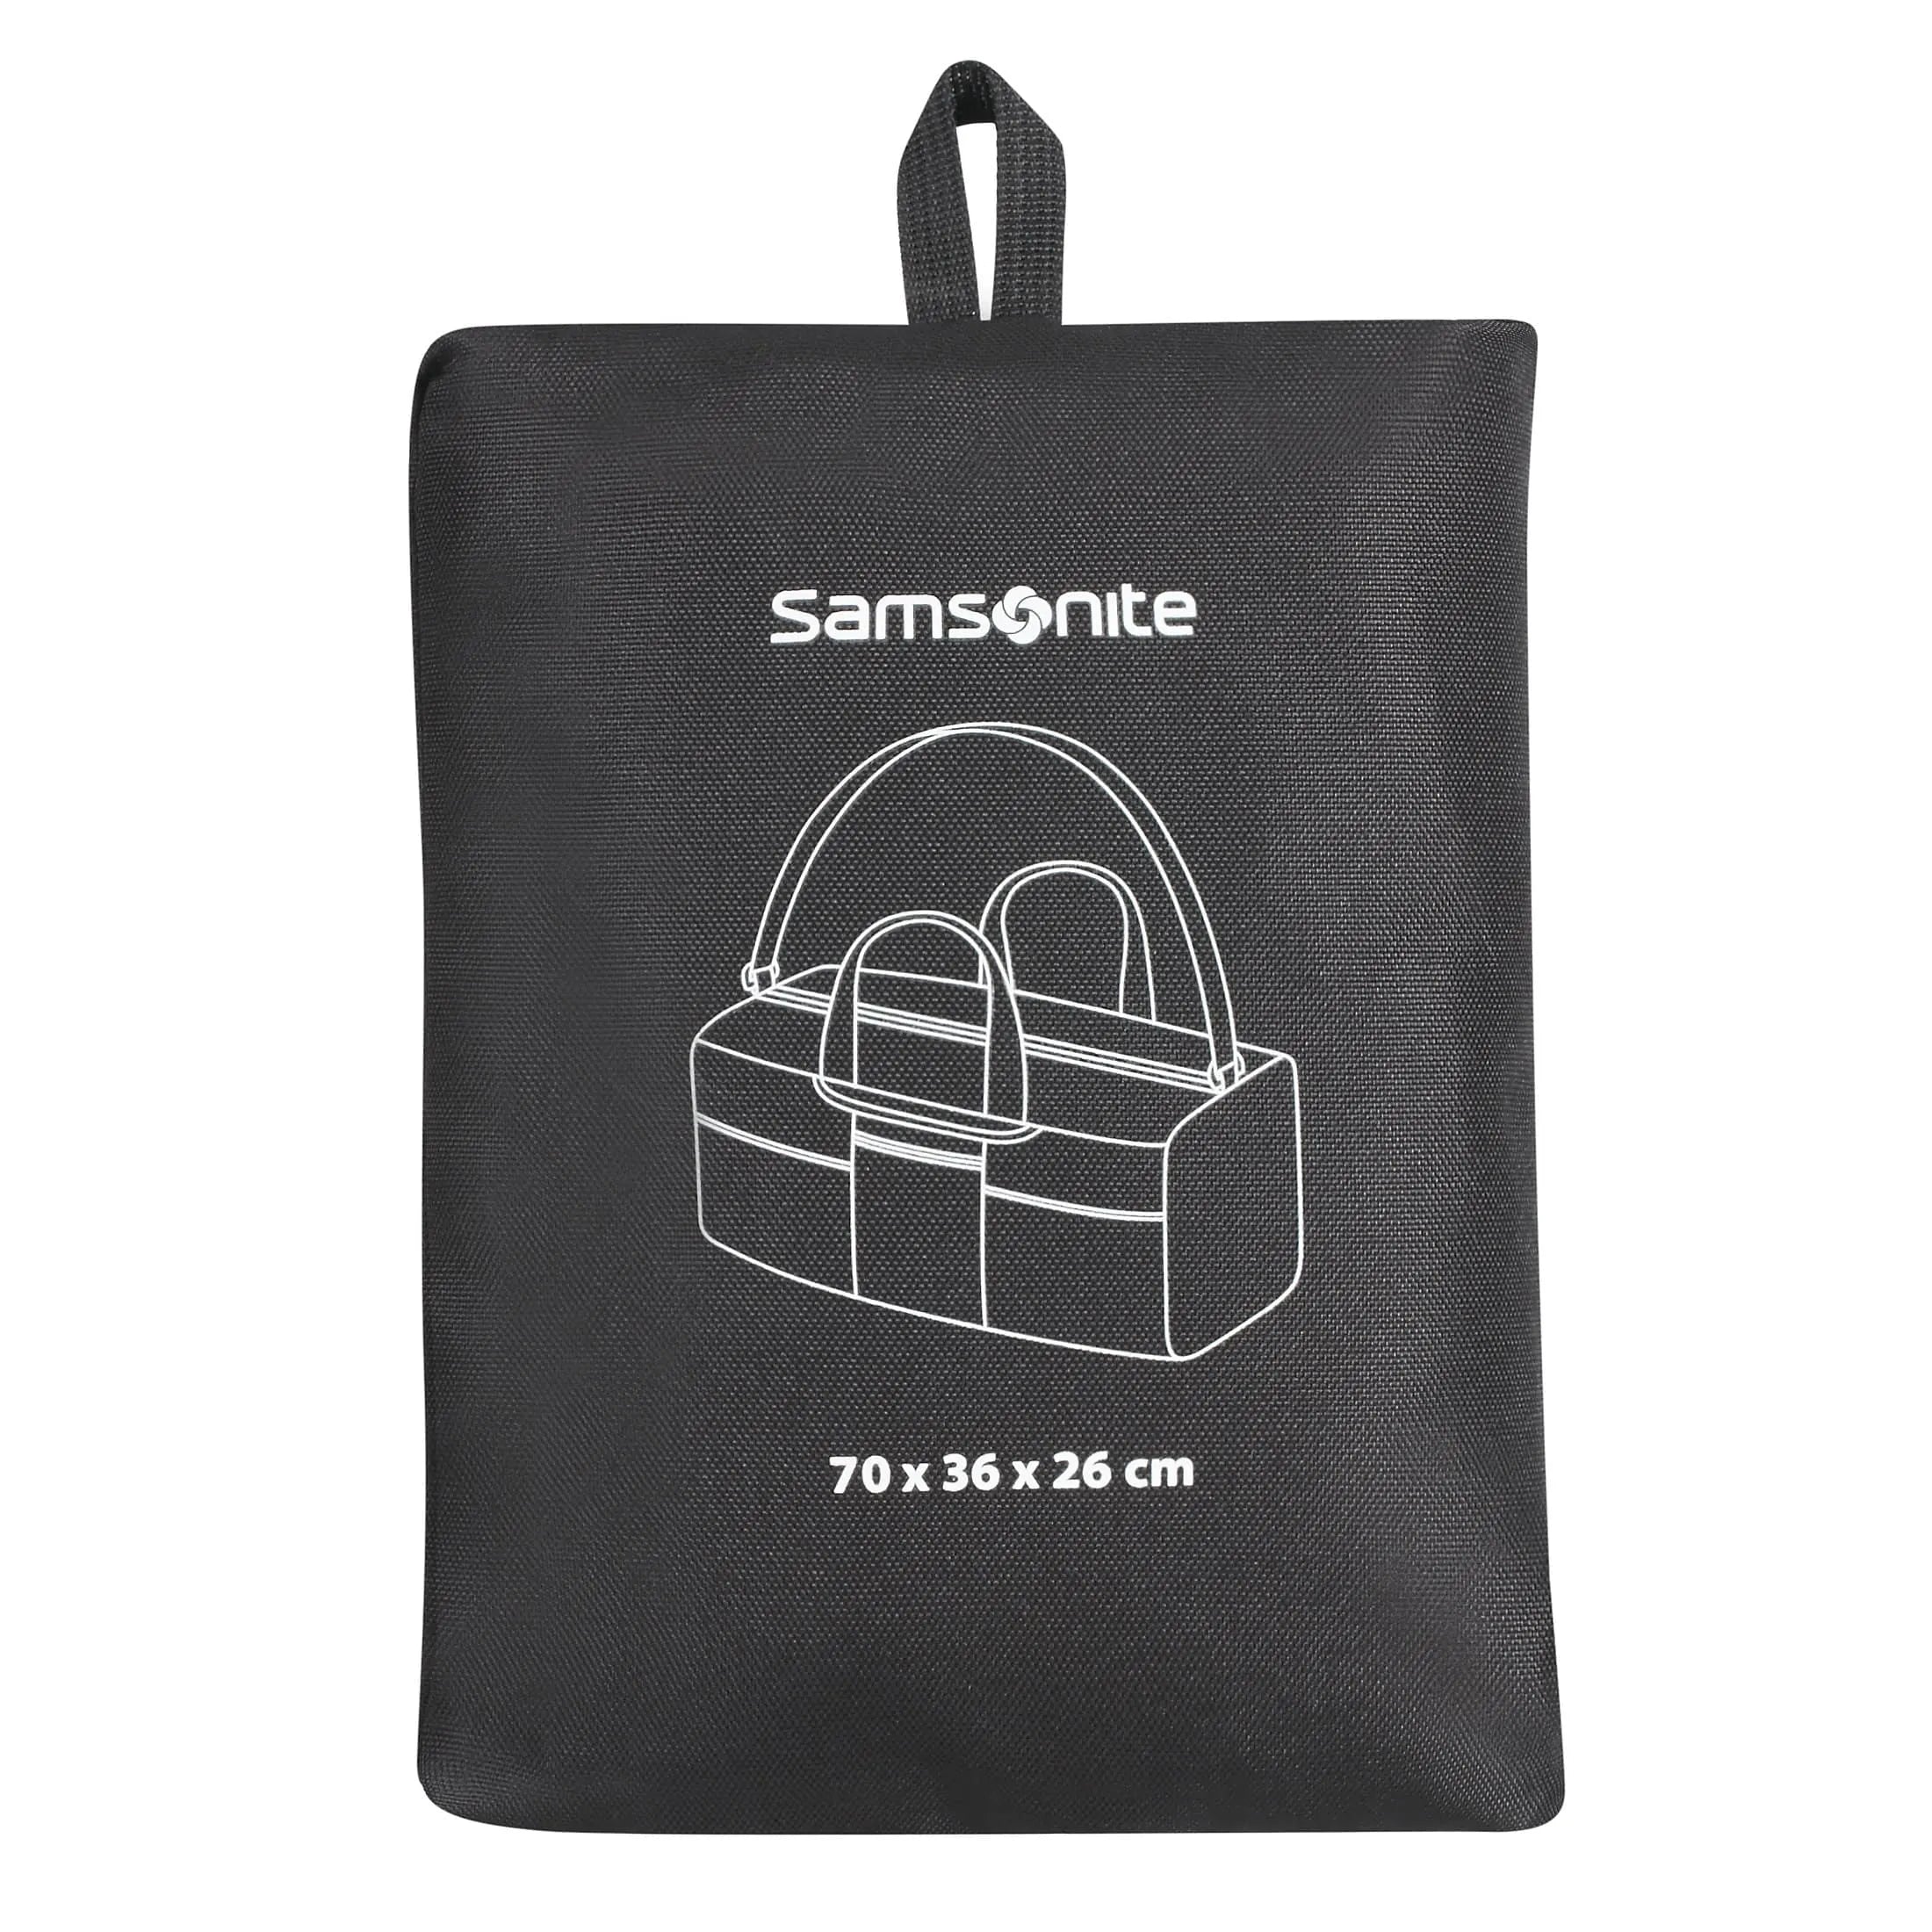 Samsonite Travel Accessories sac de voyage 70 cm - noir